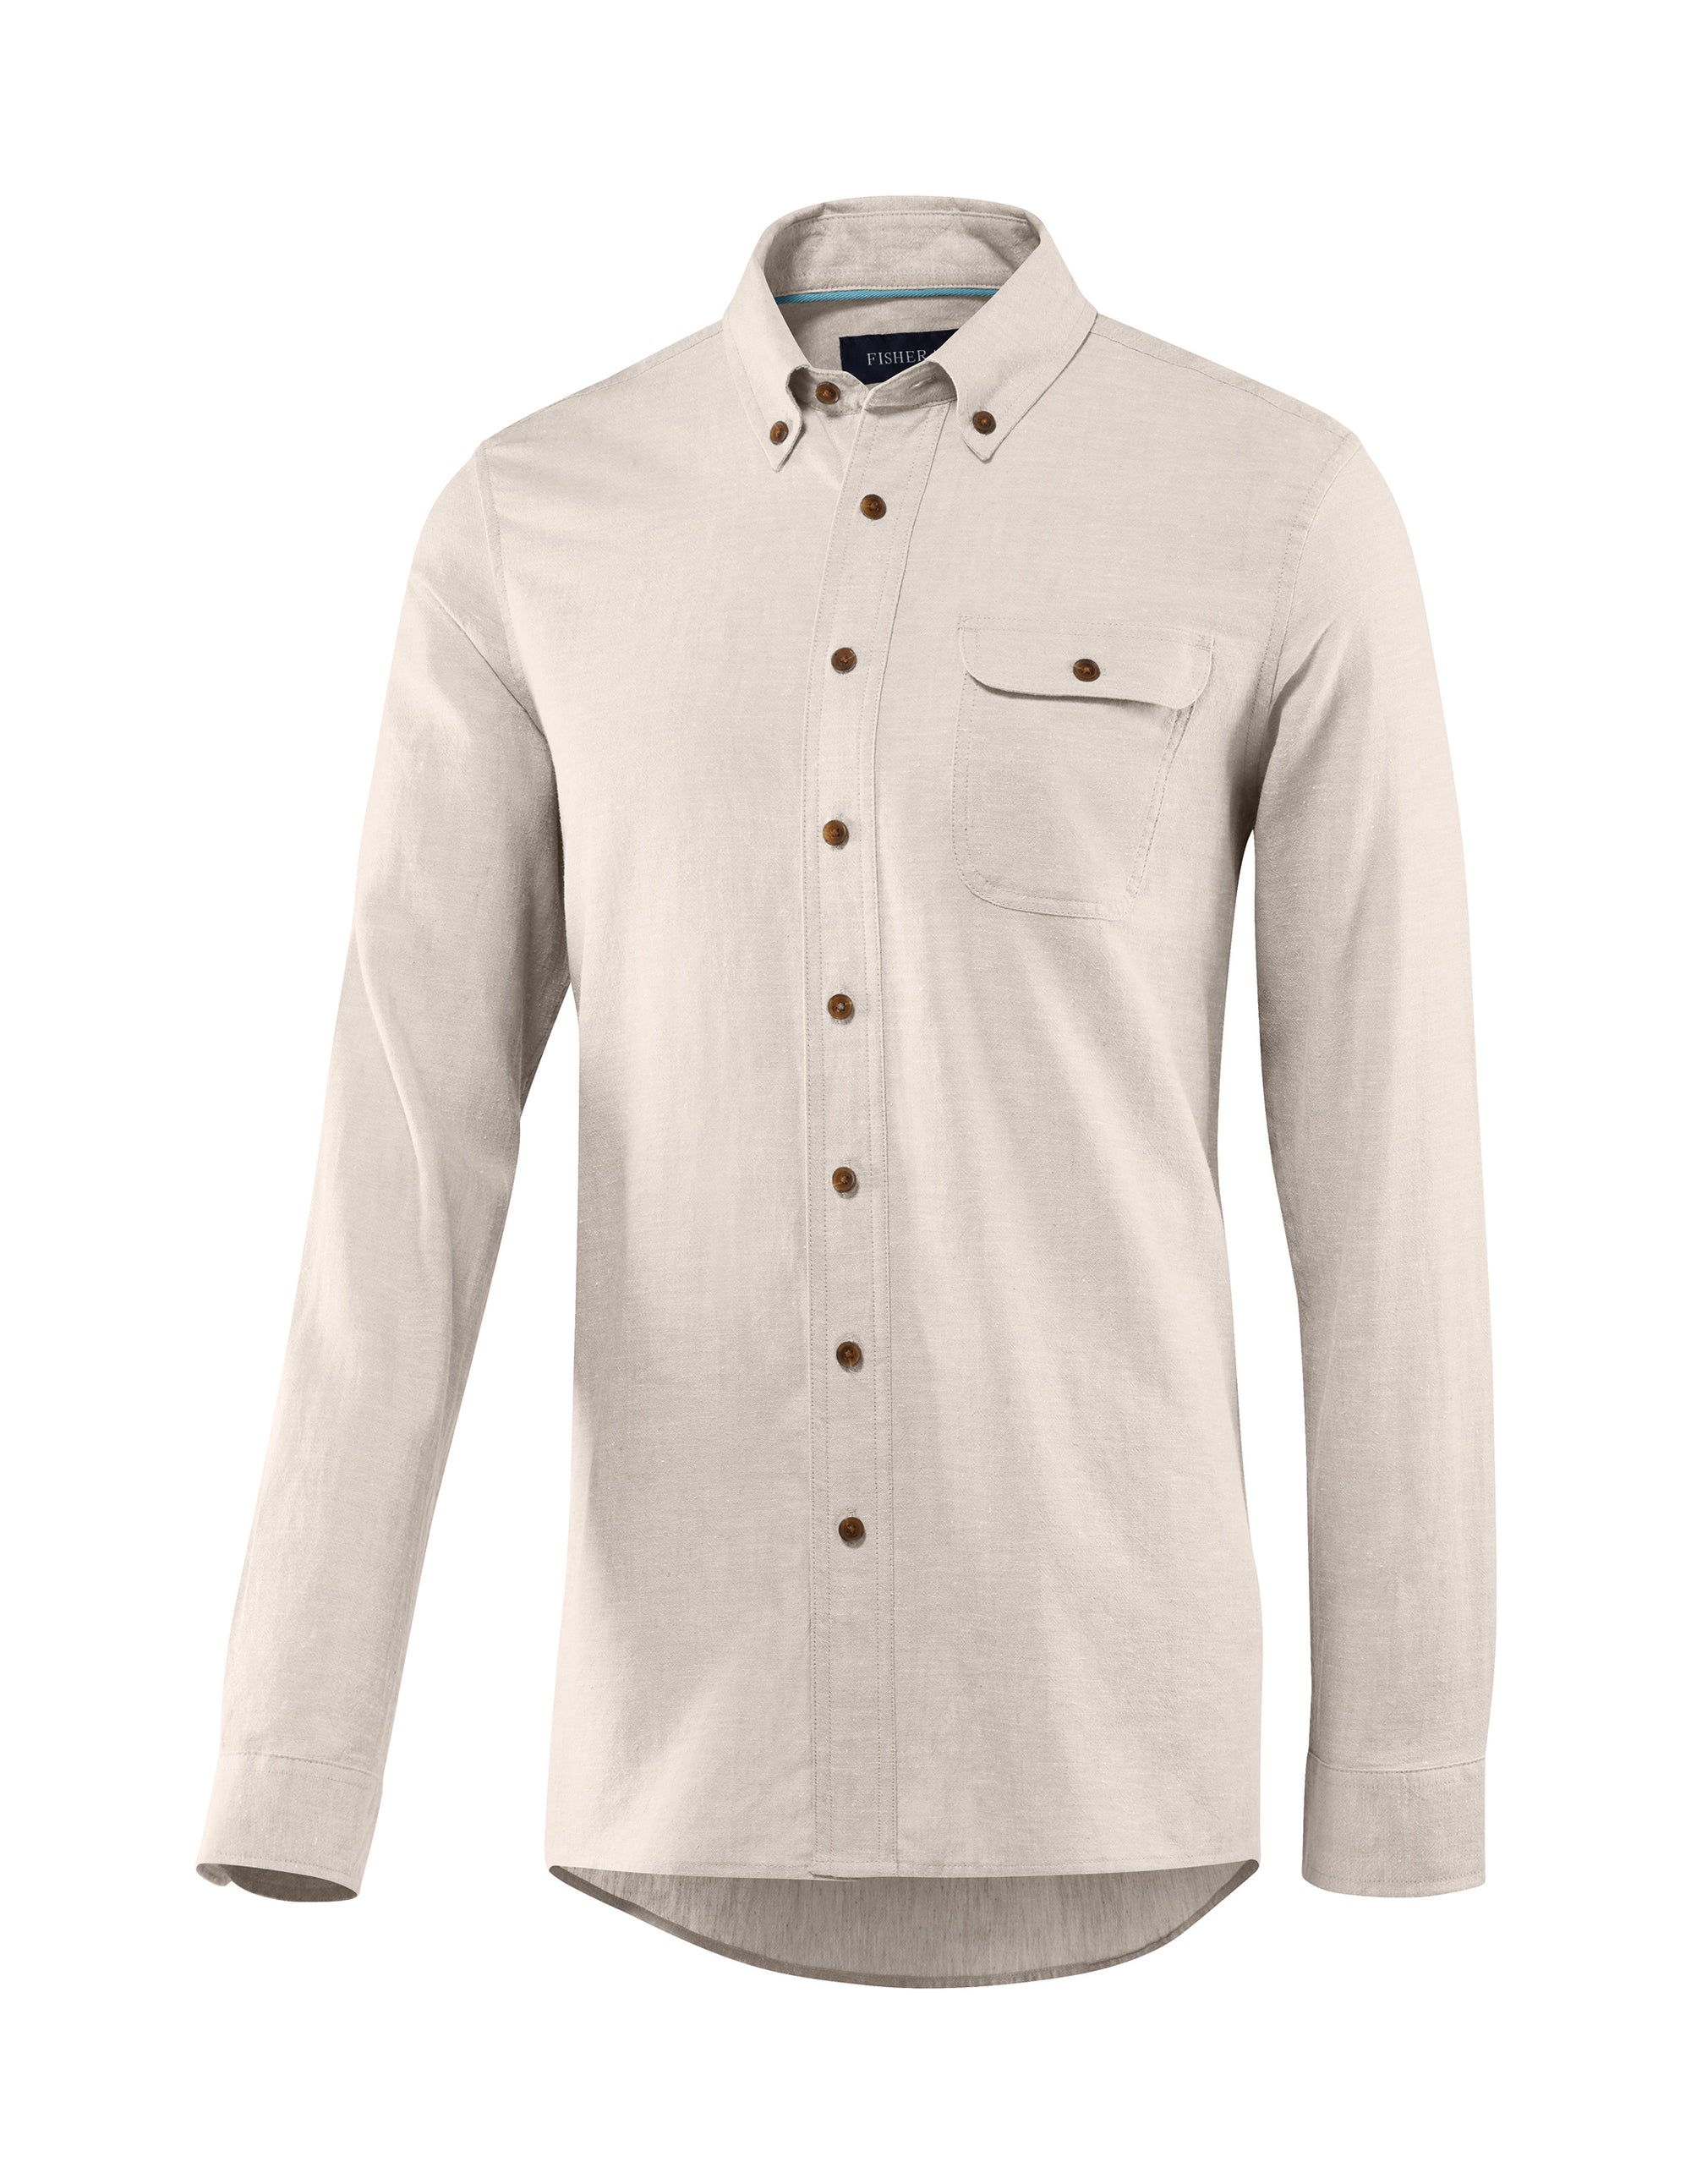 Men's Bastille Long Sleeve Button Down Hemp and Organic Cotton Shirt by Fisher + Baker Rose